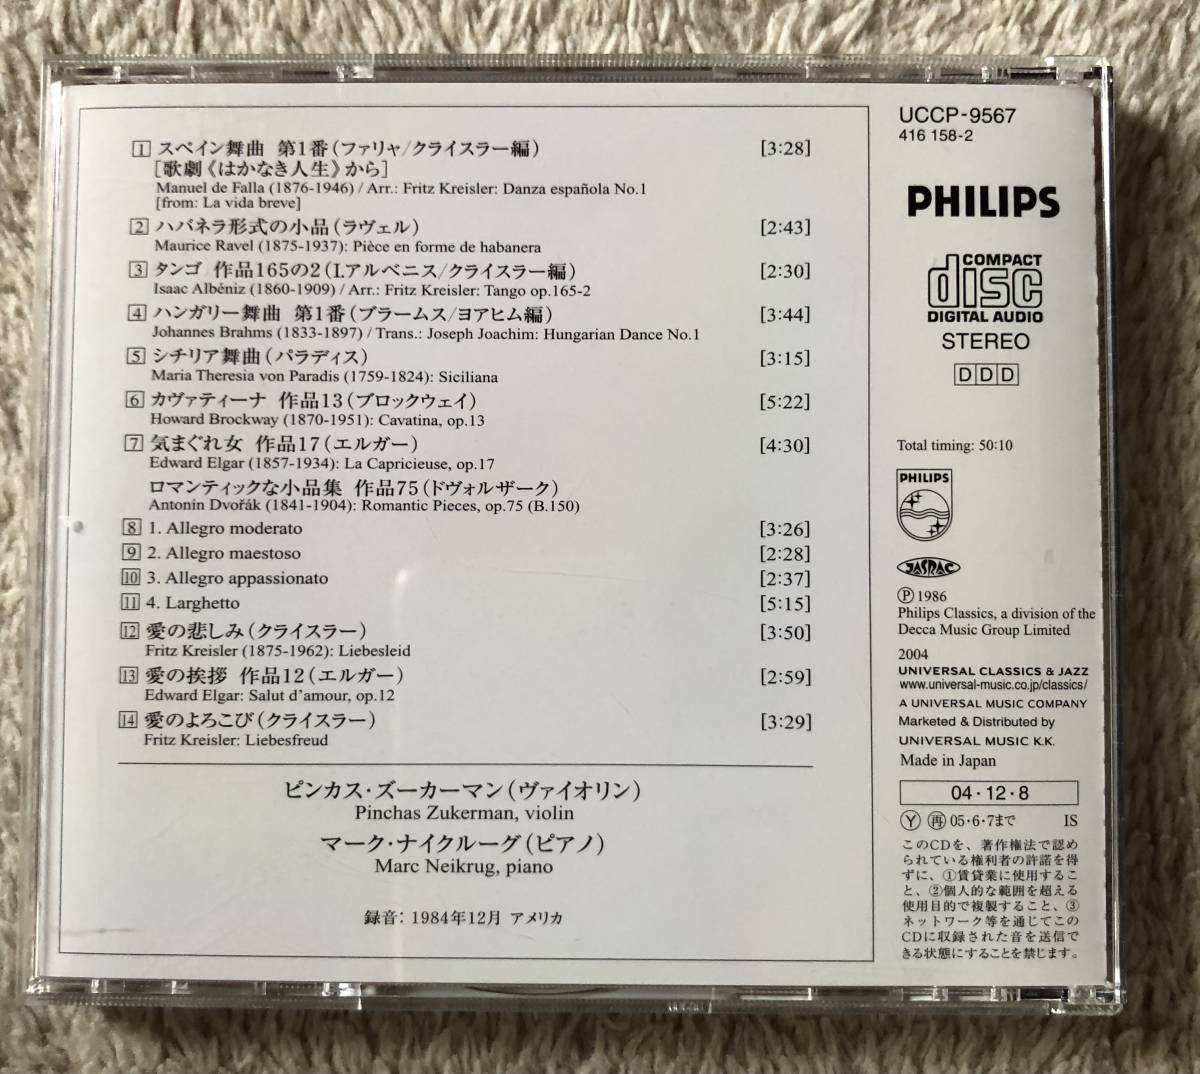 CD-May / ピンカス・ズーカーマン (vn) マーク・ナイクルーグ (p) / ズーカーマン・ヴァイオリン・アンコール